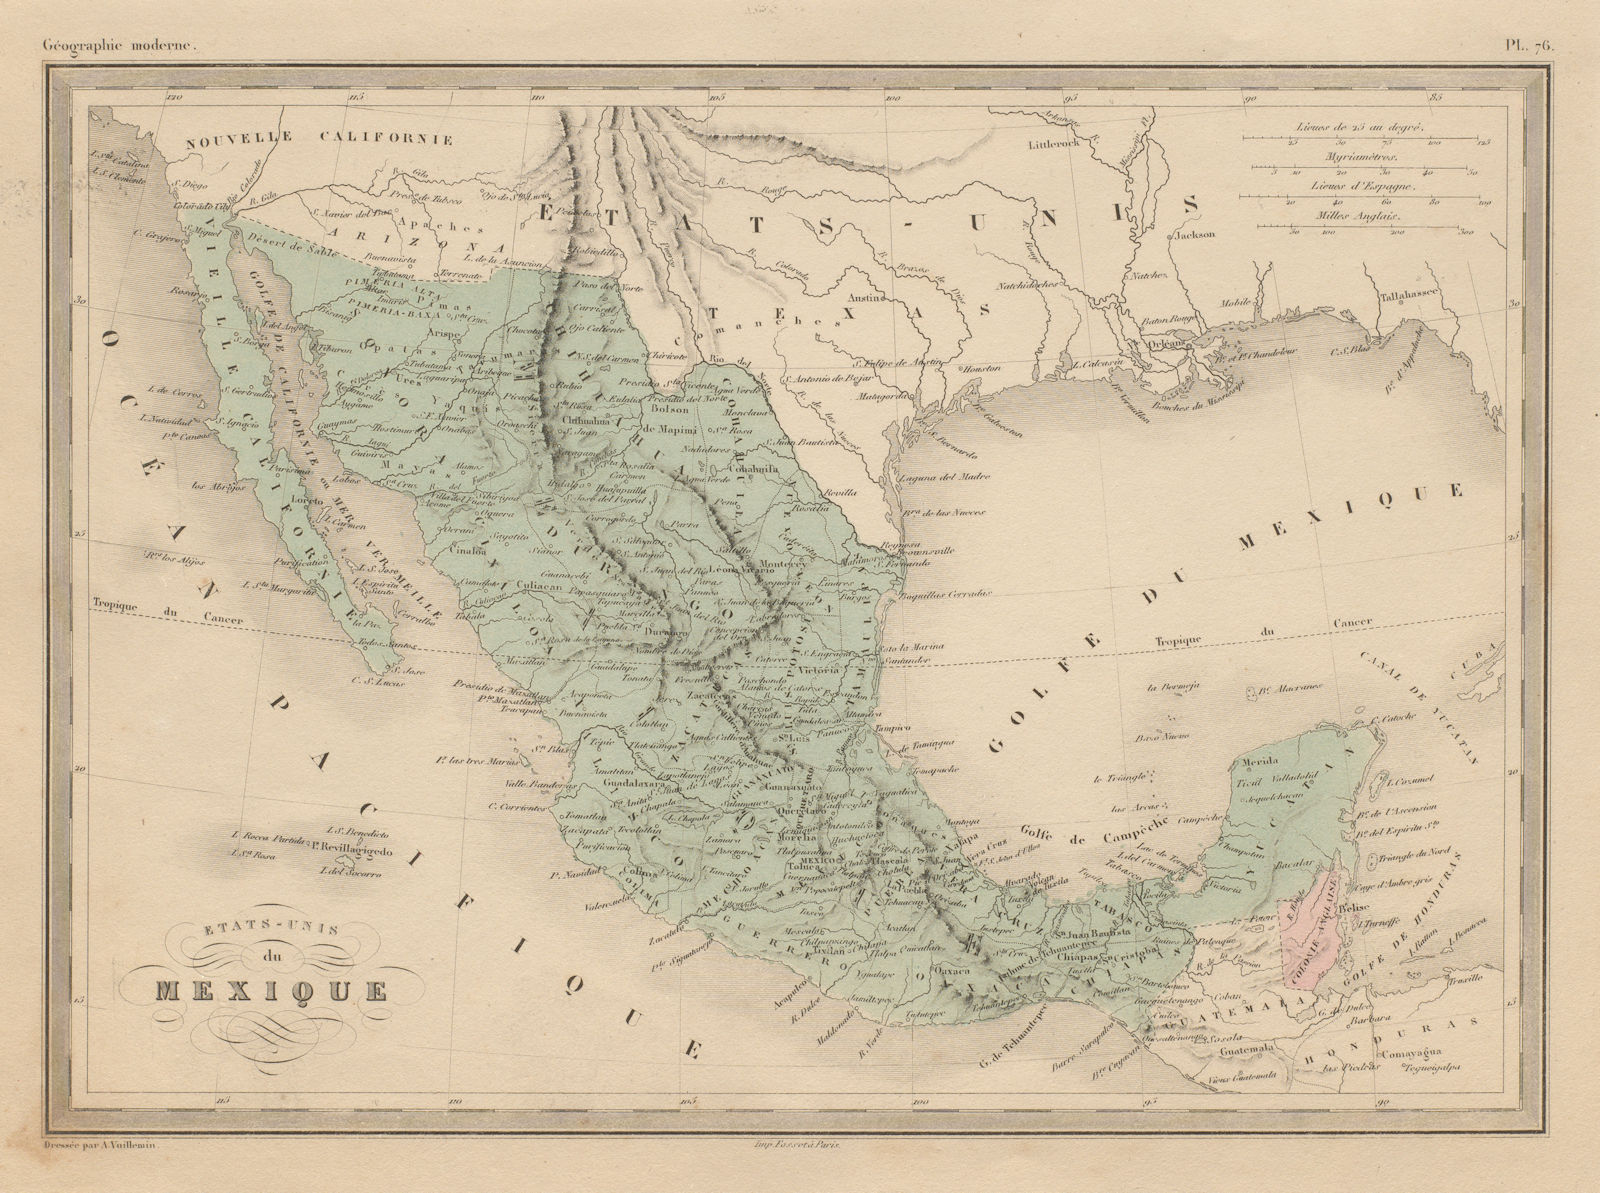 Etats-Unis du Mexique. United States of Mexico. MALTE-BRUN c1871 old map